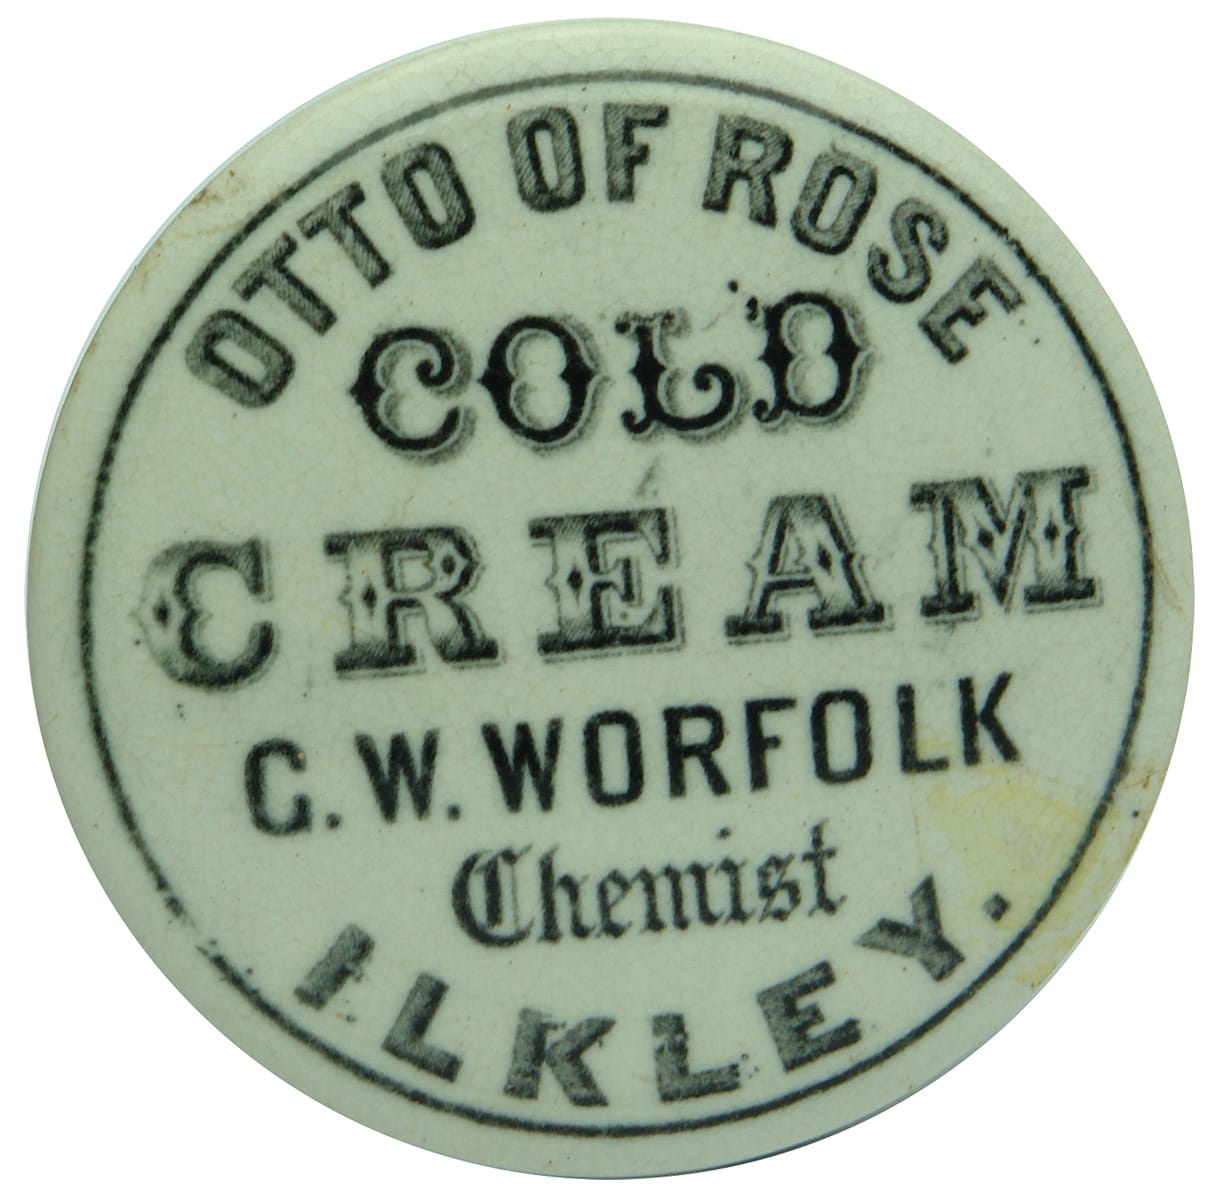 Cold Cream Worfolk Chemist Ilkley Pot Lid